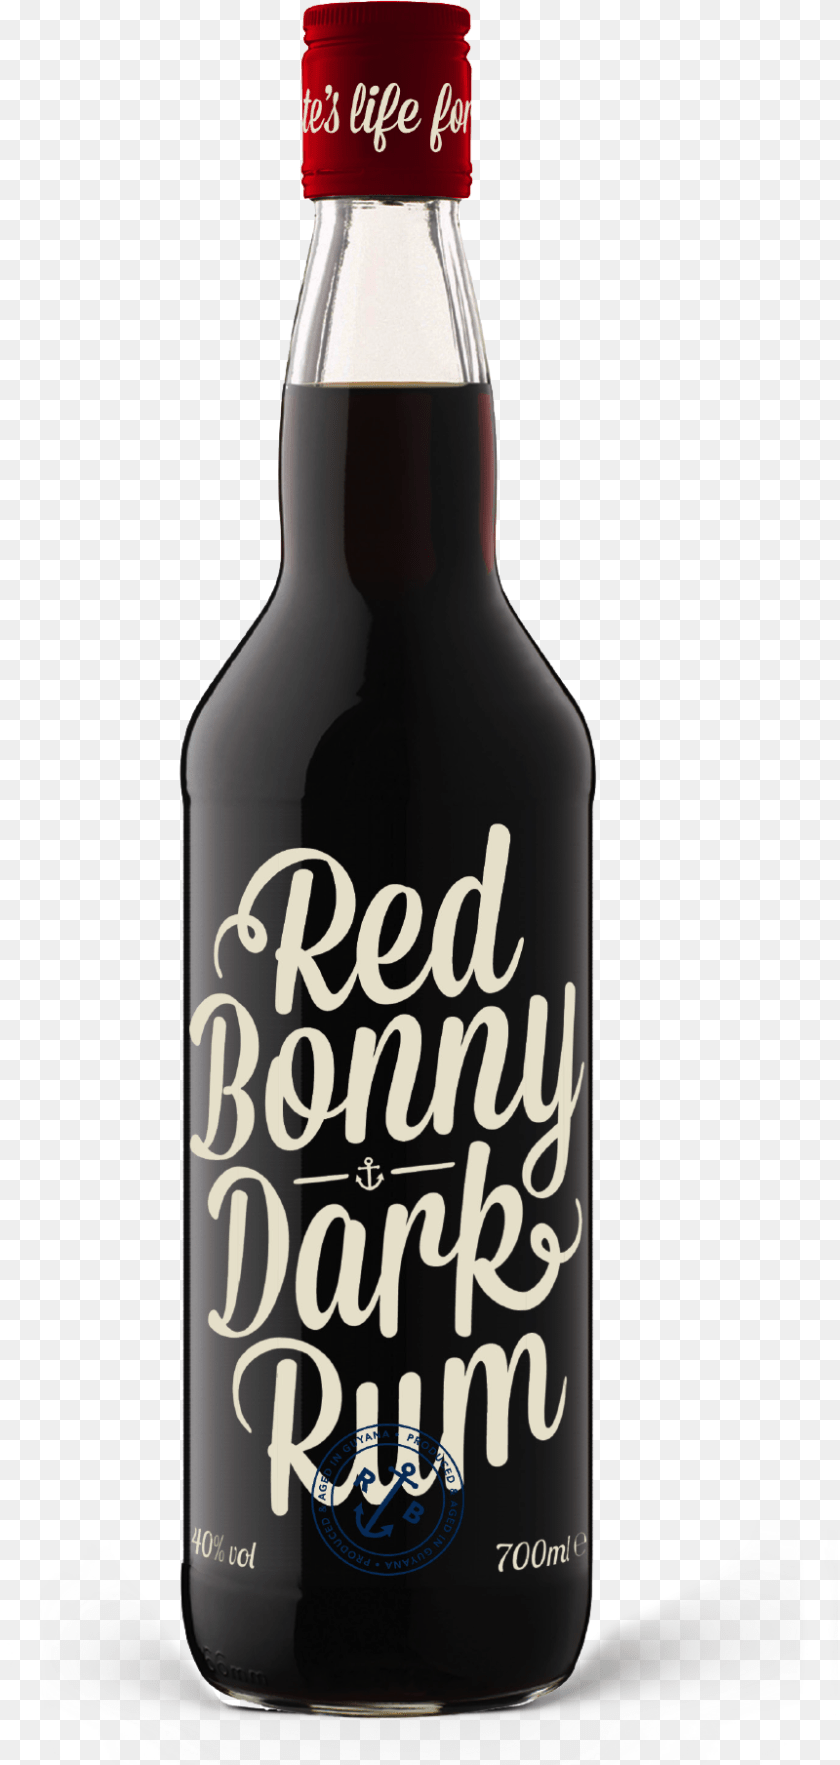 861x1809 Red Bonny Dark Rum Bottle Glass Bottle, Alcohol, Beer, Beverage, Liquor Clipart PNG